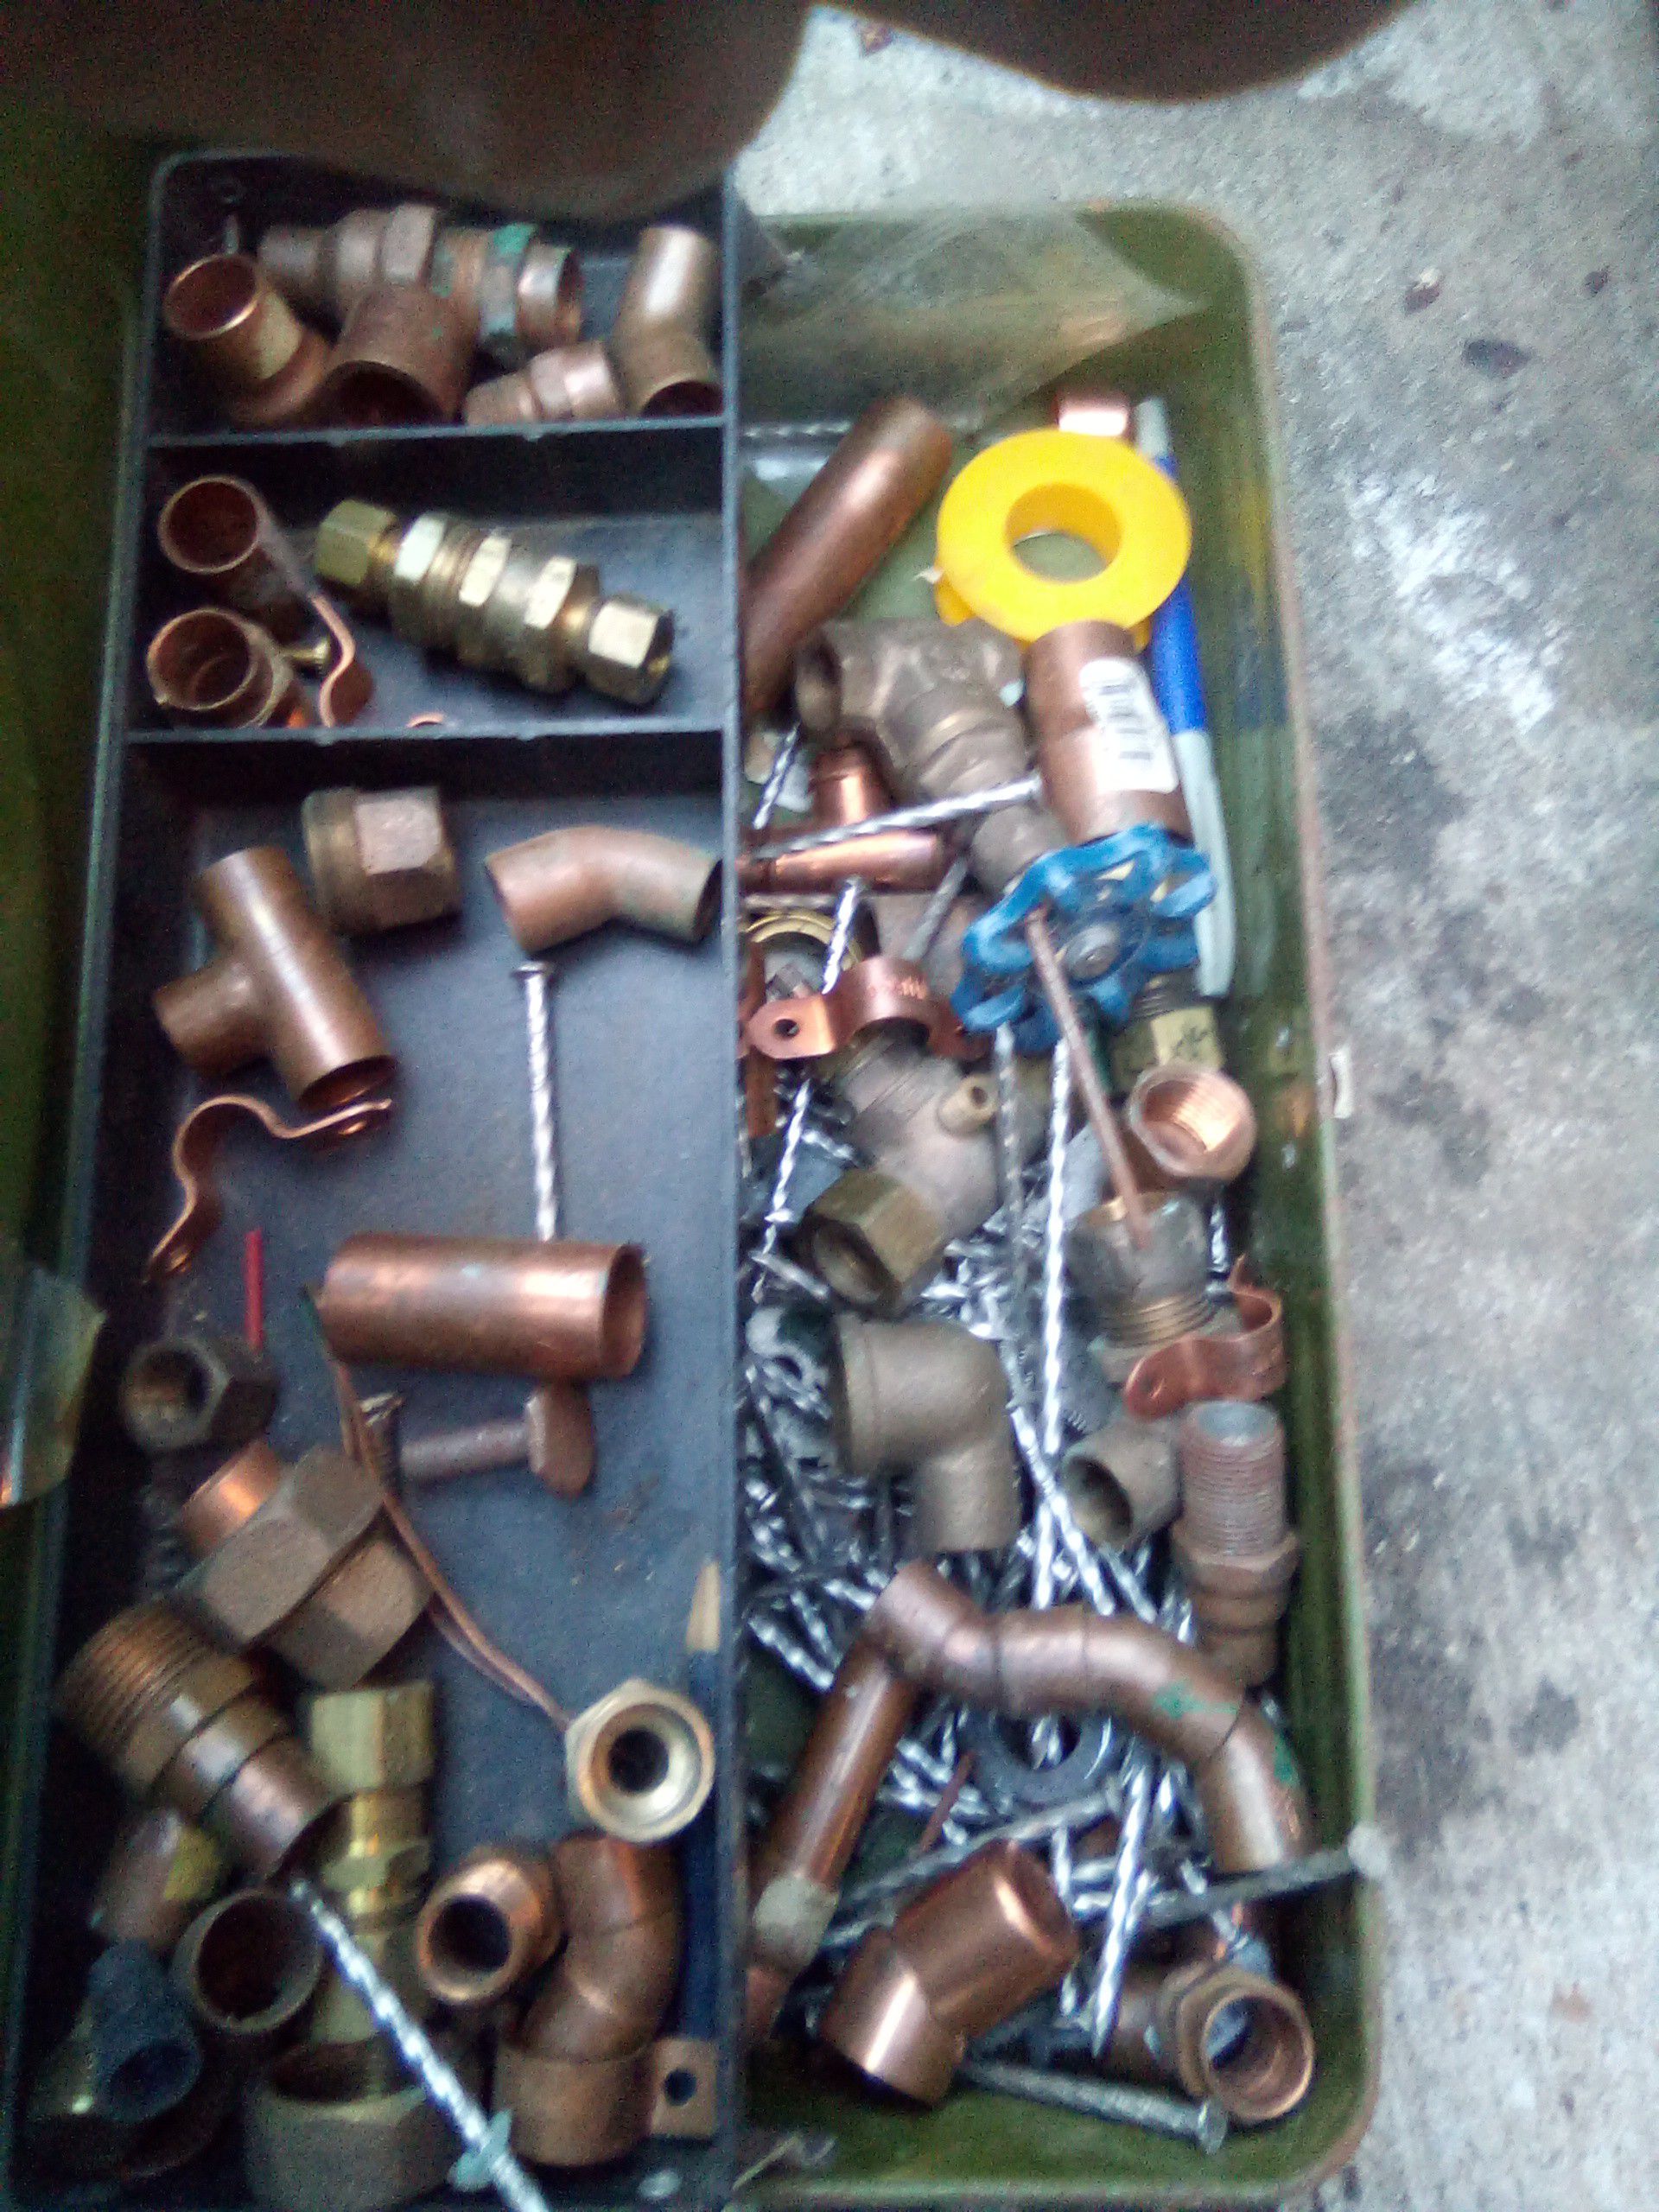 Copper, hammer drill, air compressor